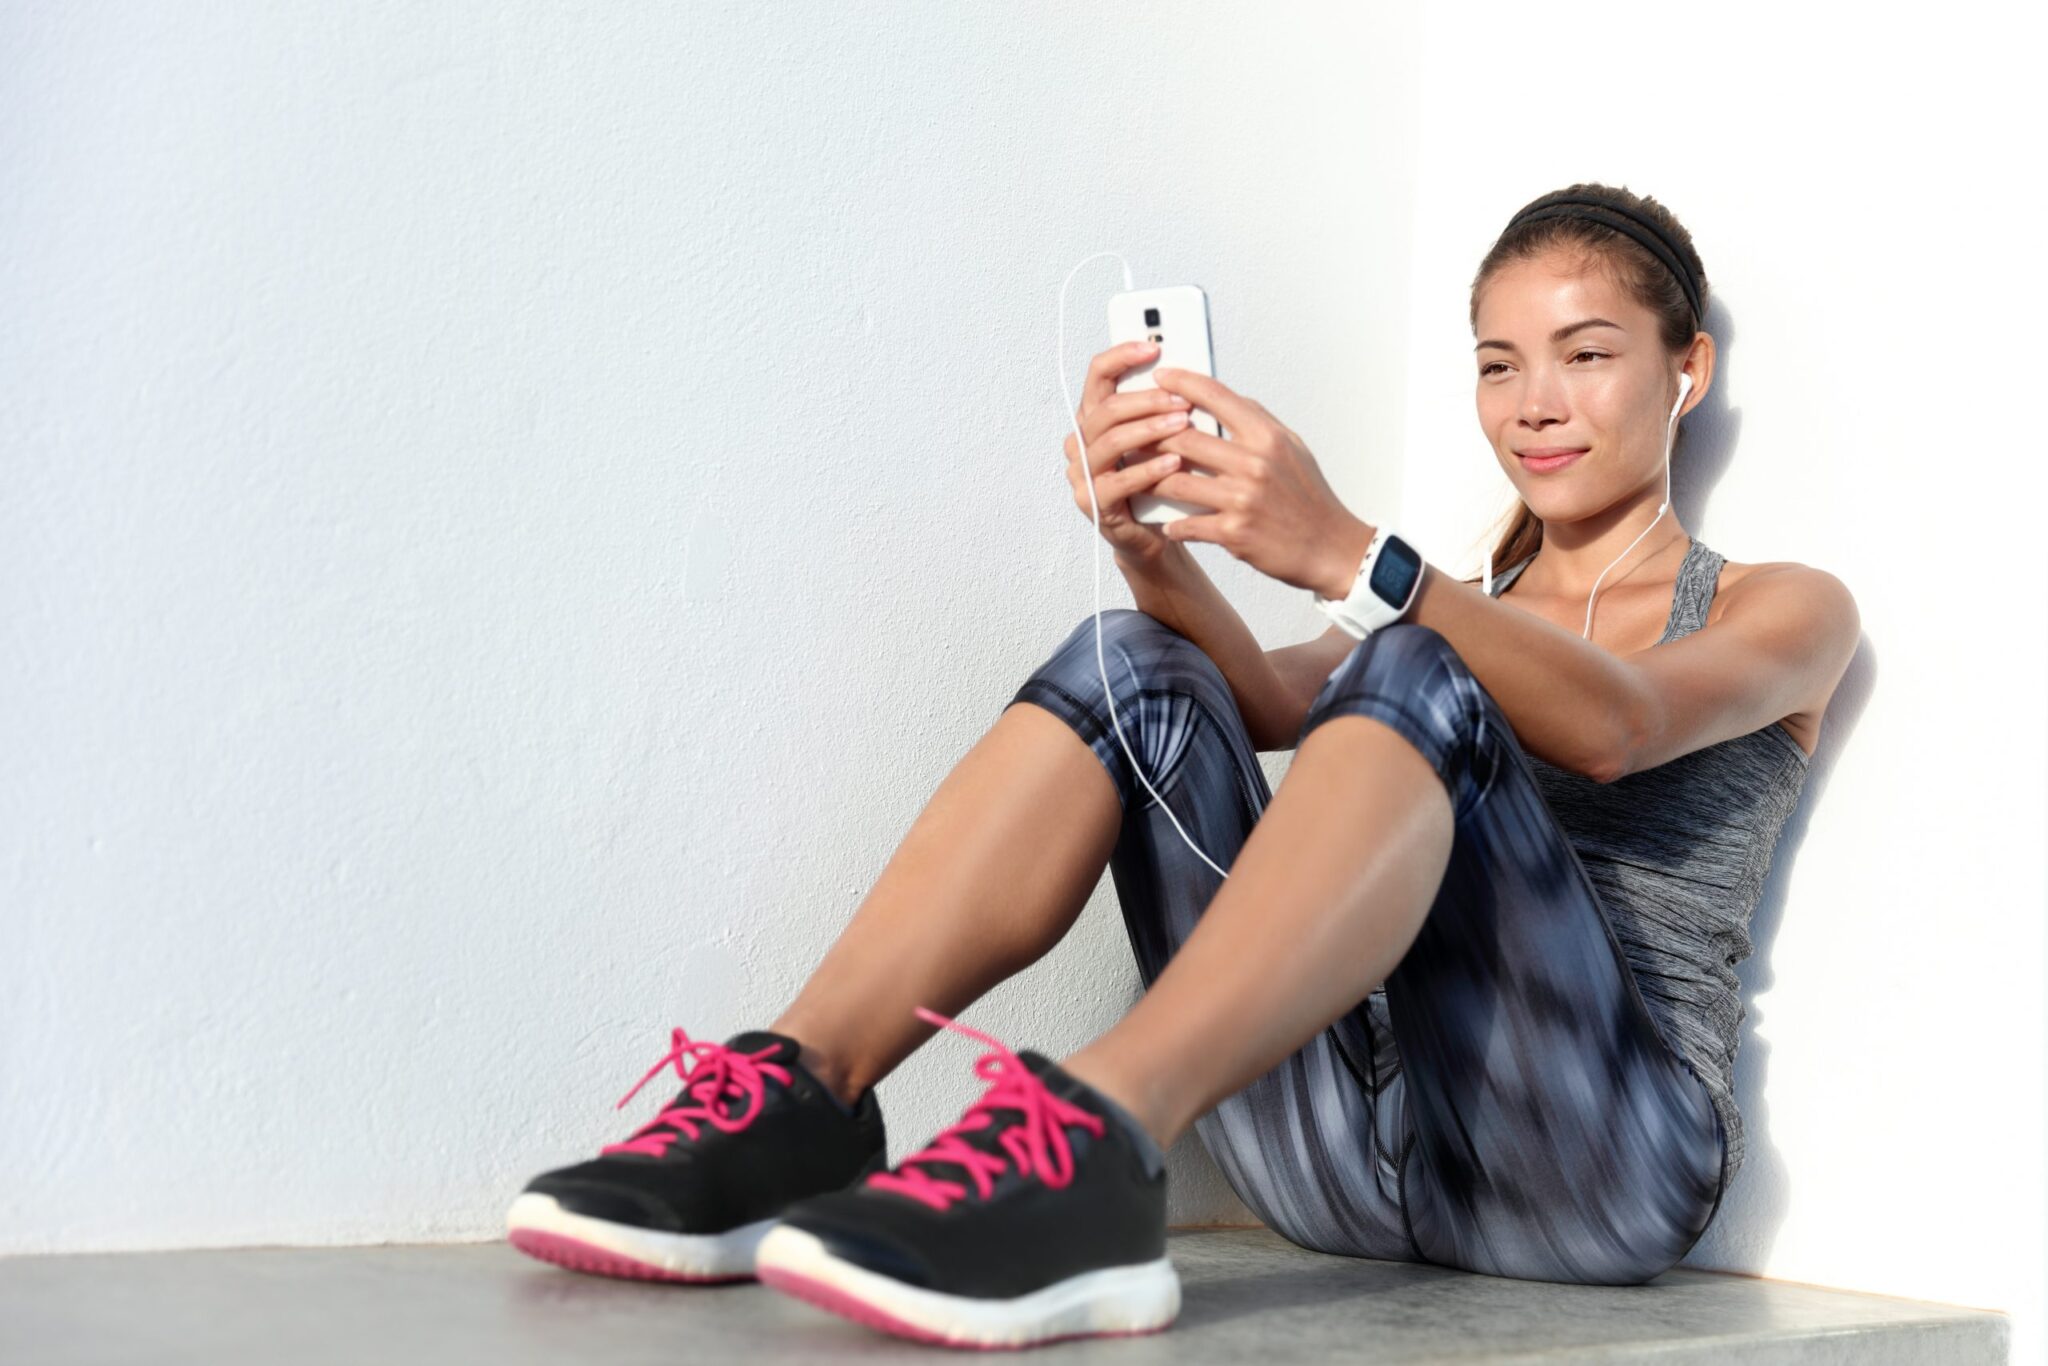 Mobile gym app truself sporting club san diego gym Sportswoman listening to music using phone app and smartwatch fitness tracker